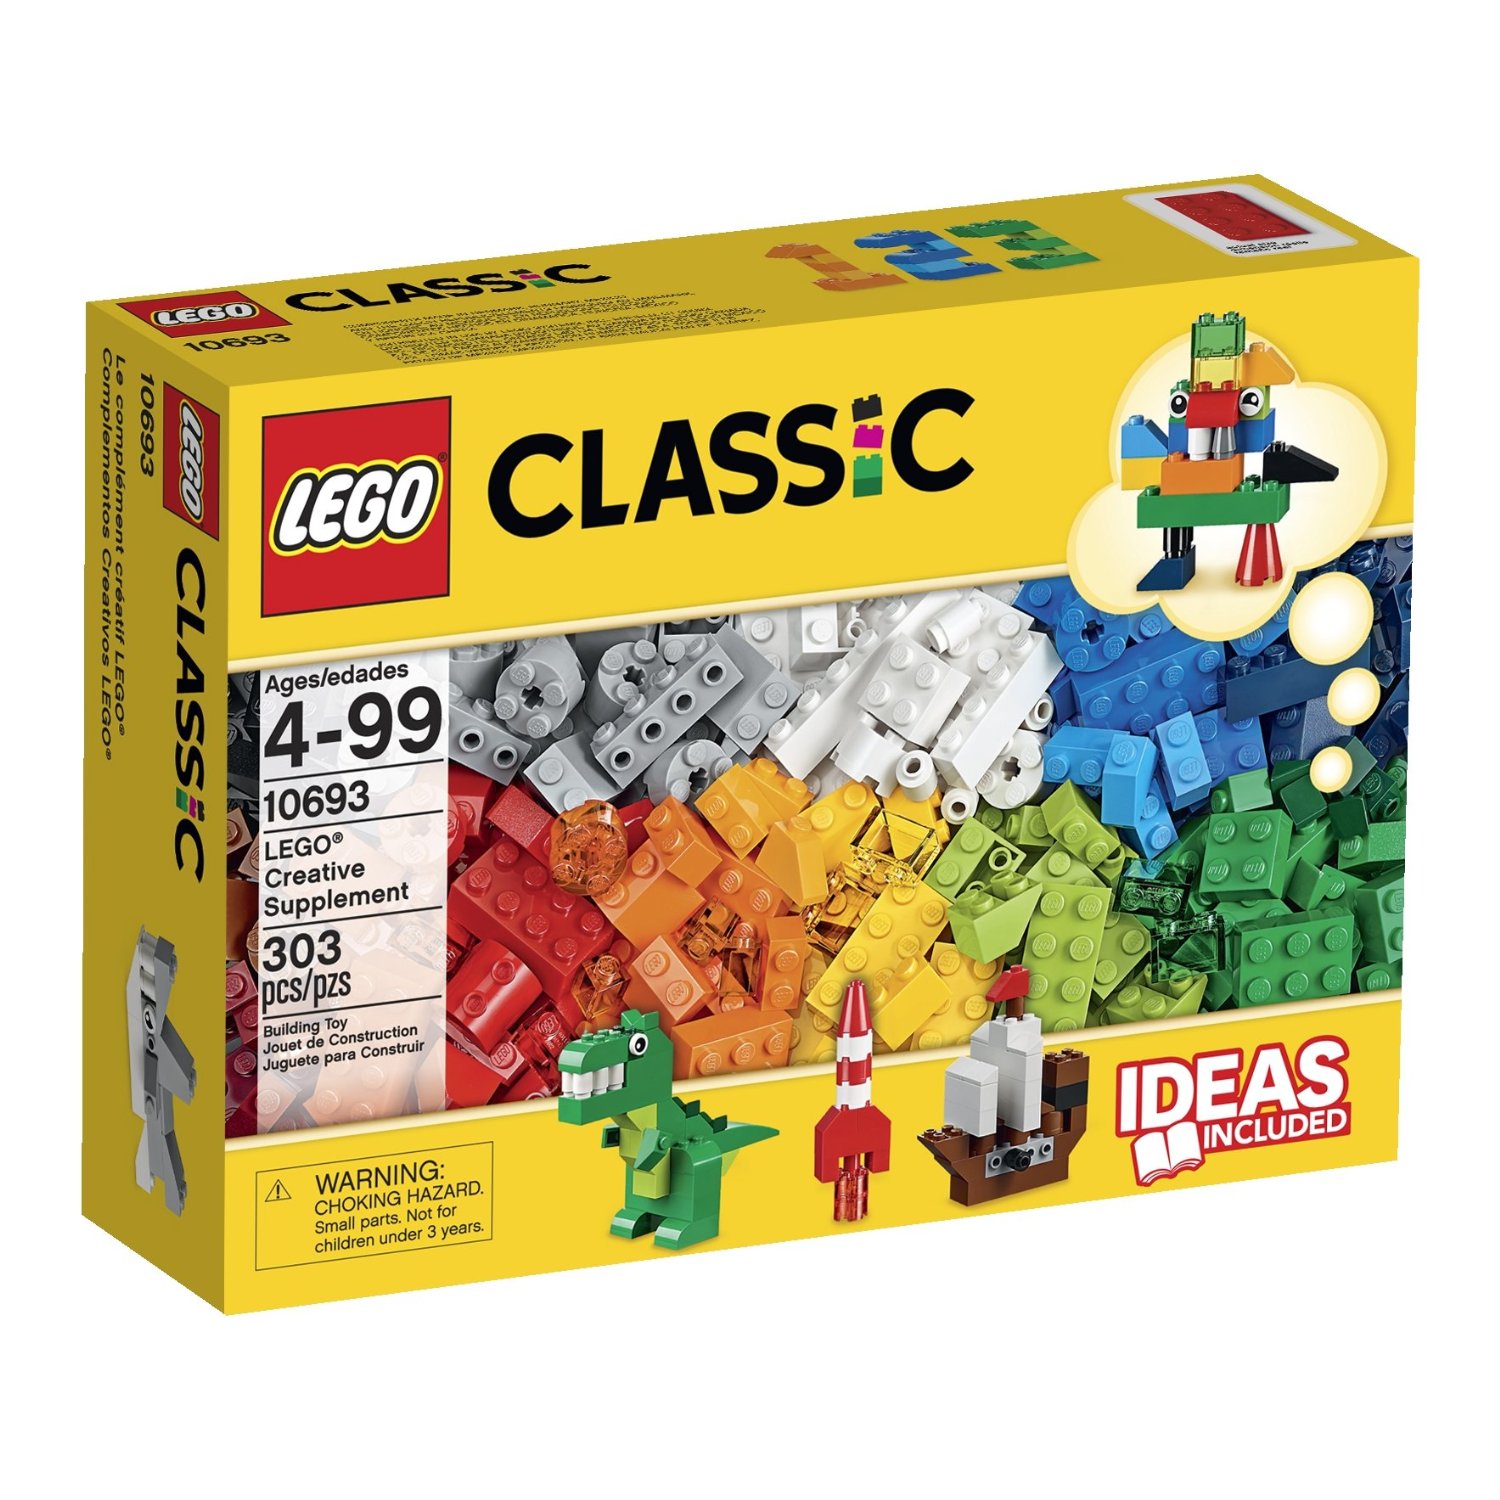 LEGO Classic Creative Supplement 10693 – Just $14.79!